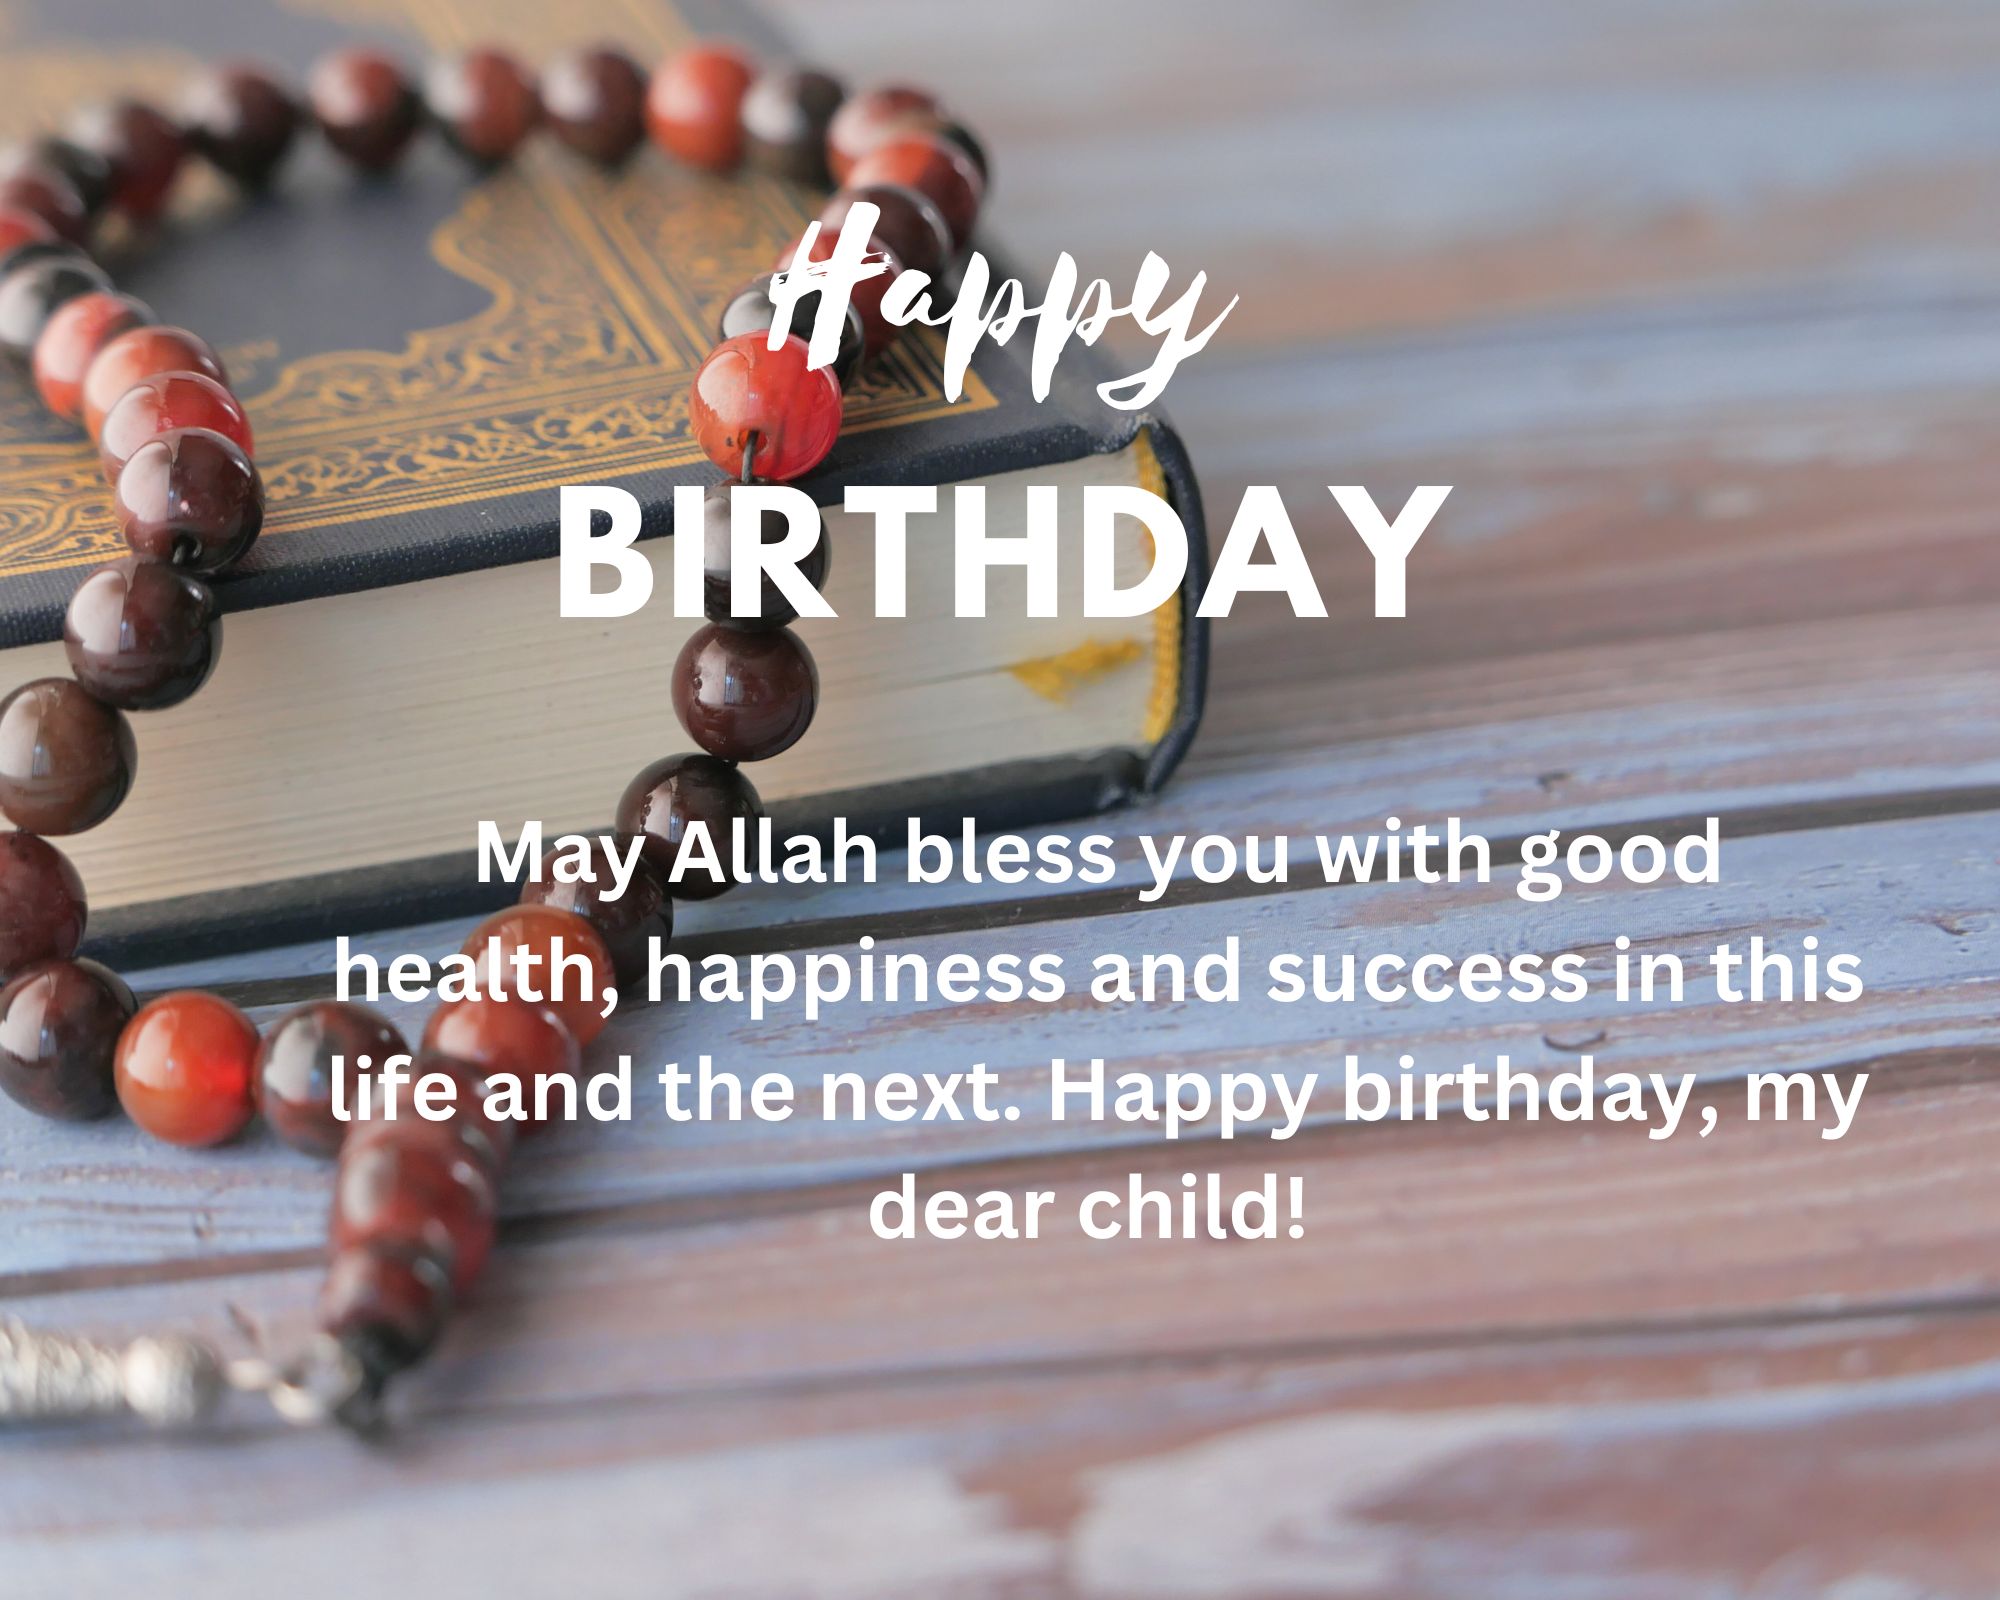 Islamic Birthday Wishes